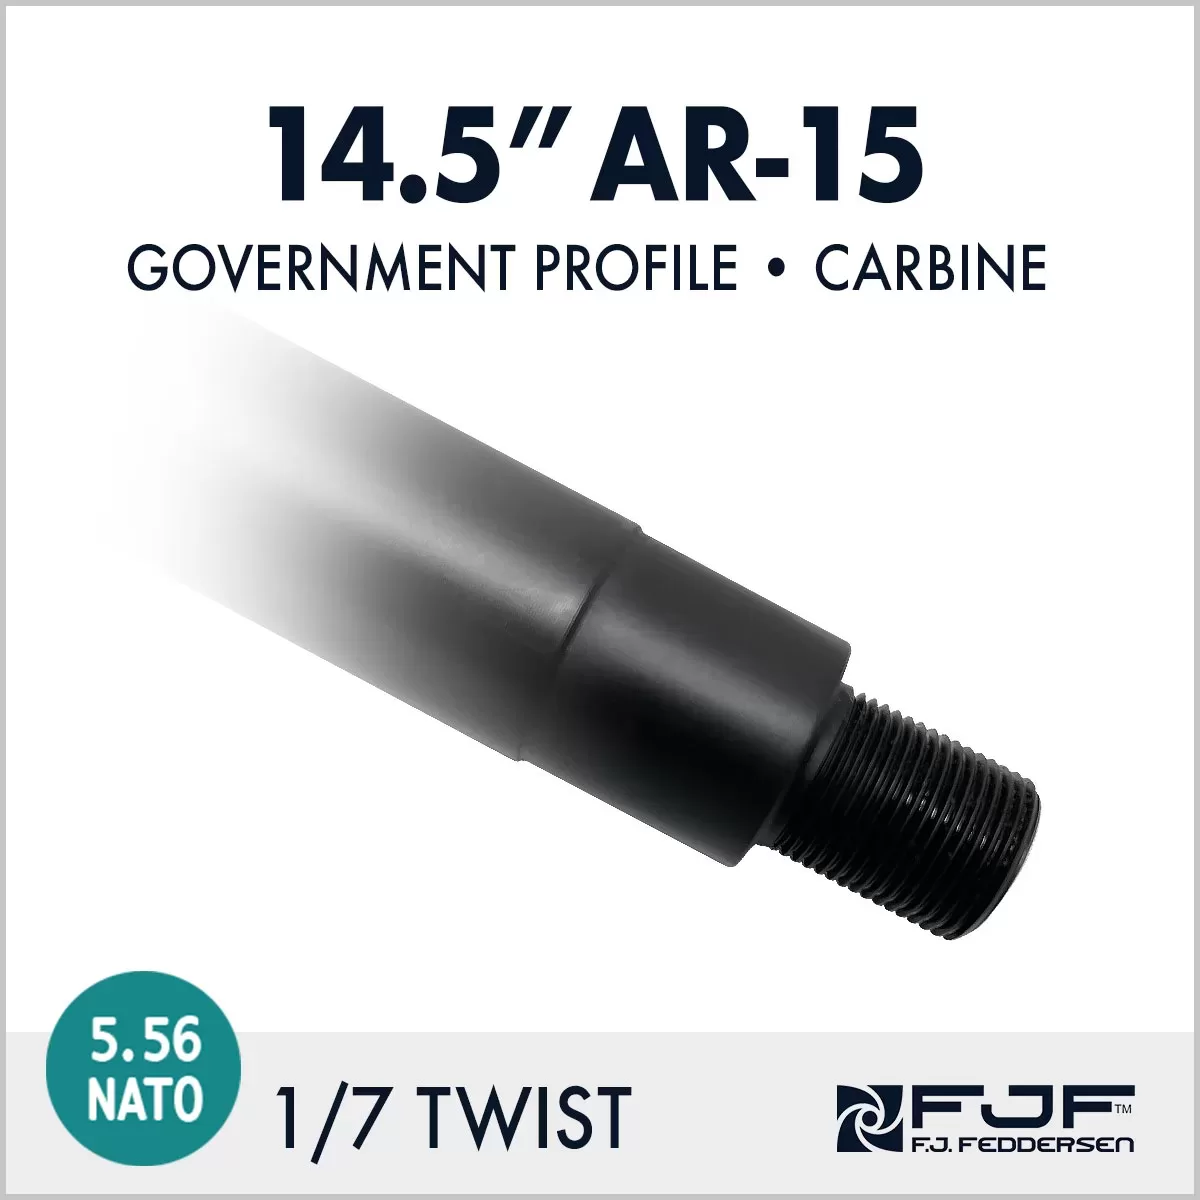 AR-15 Barrel by FJ Feddersen - Government Profile - 14.5" Carbine